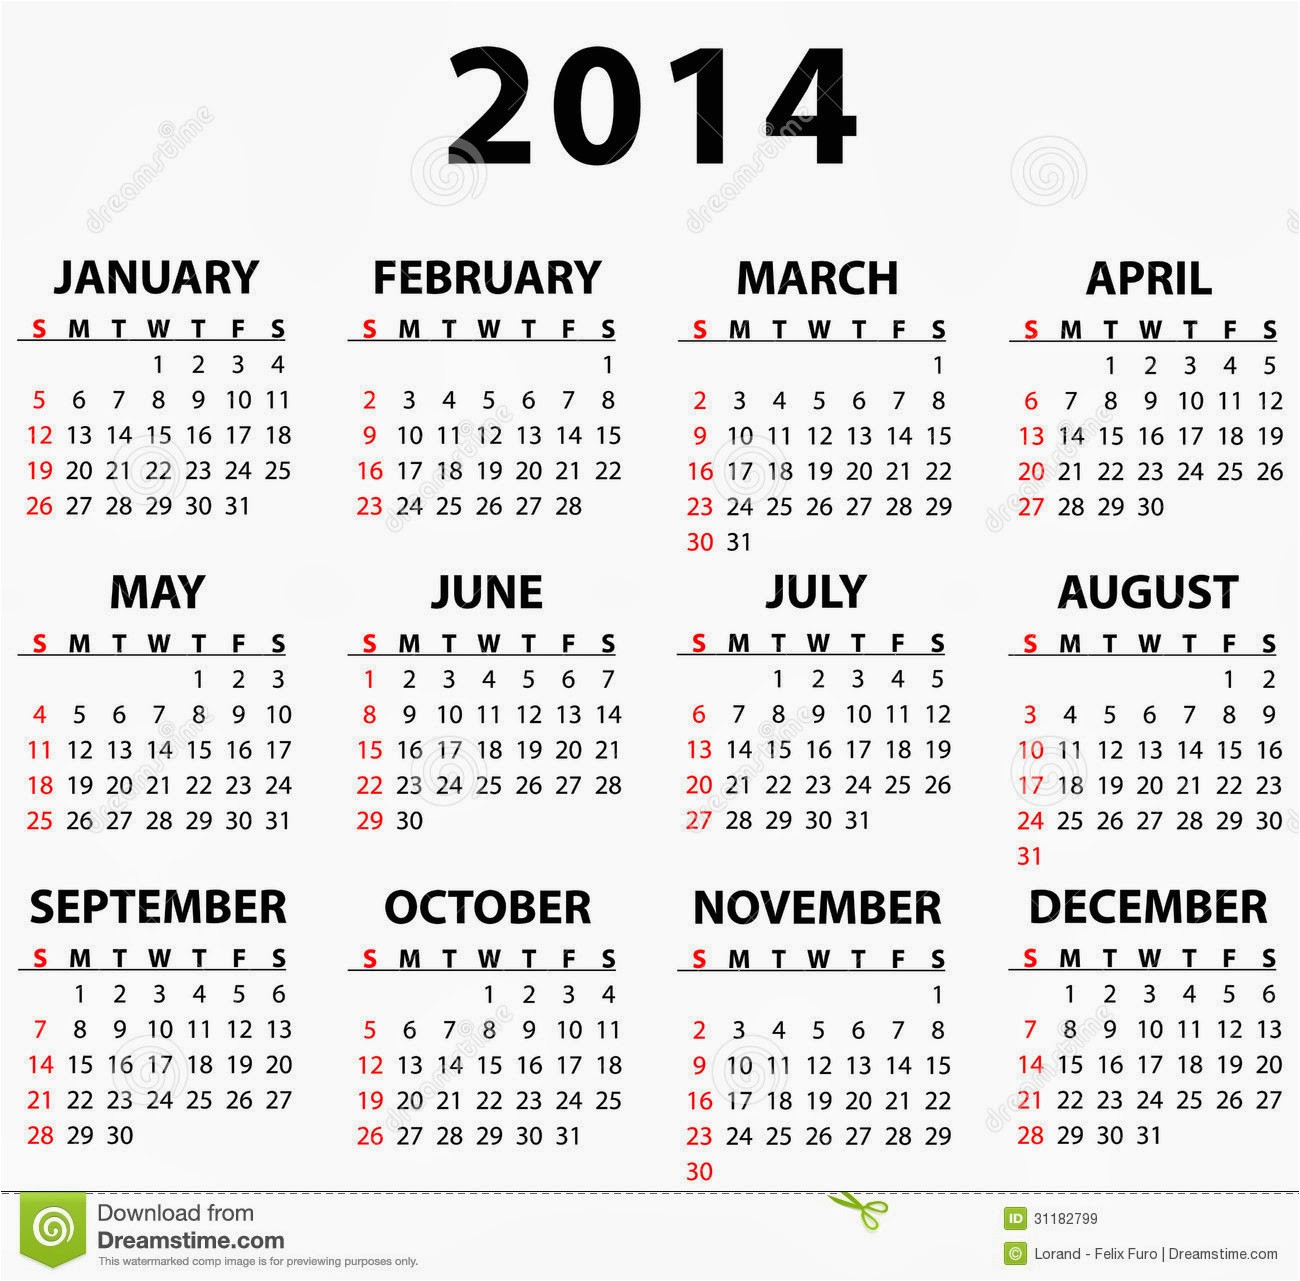 free calendar templates 2014 to print